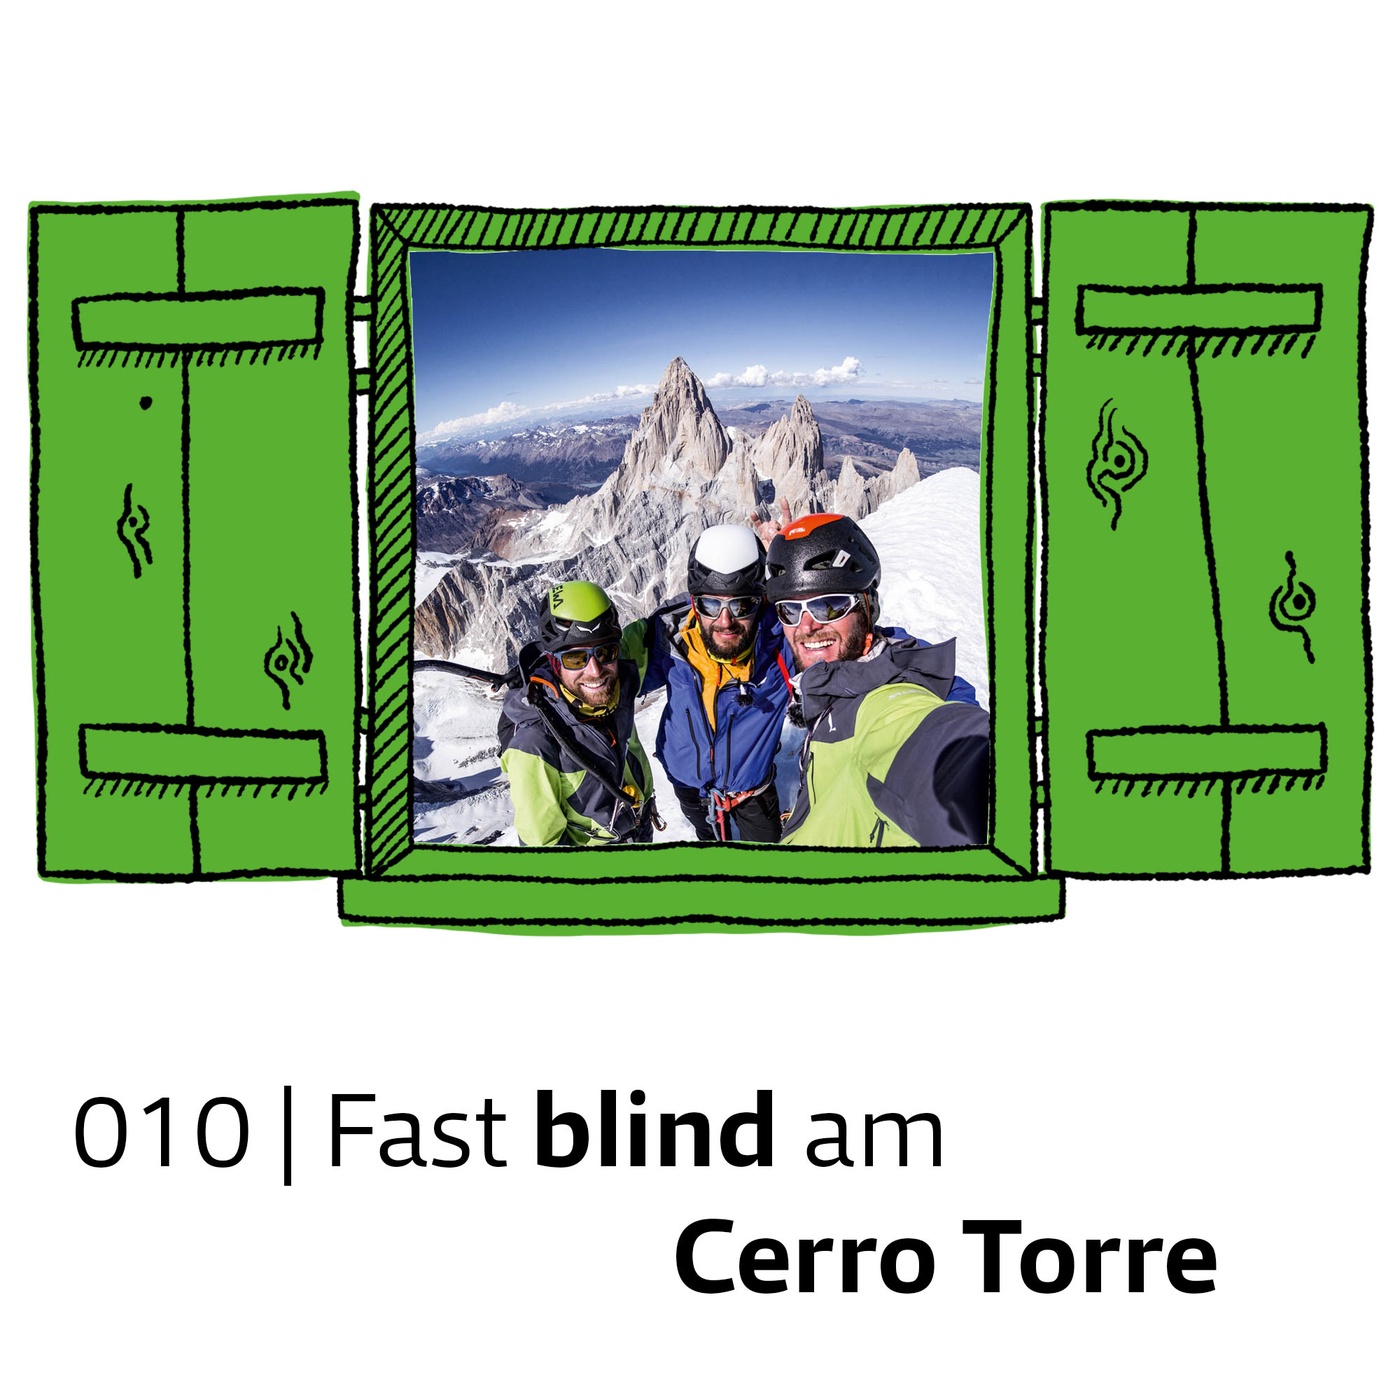 #010 Fast blind am Cerro Torre